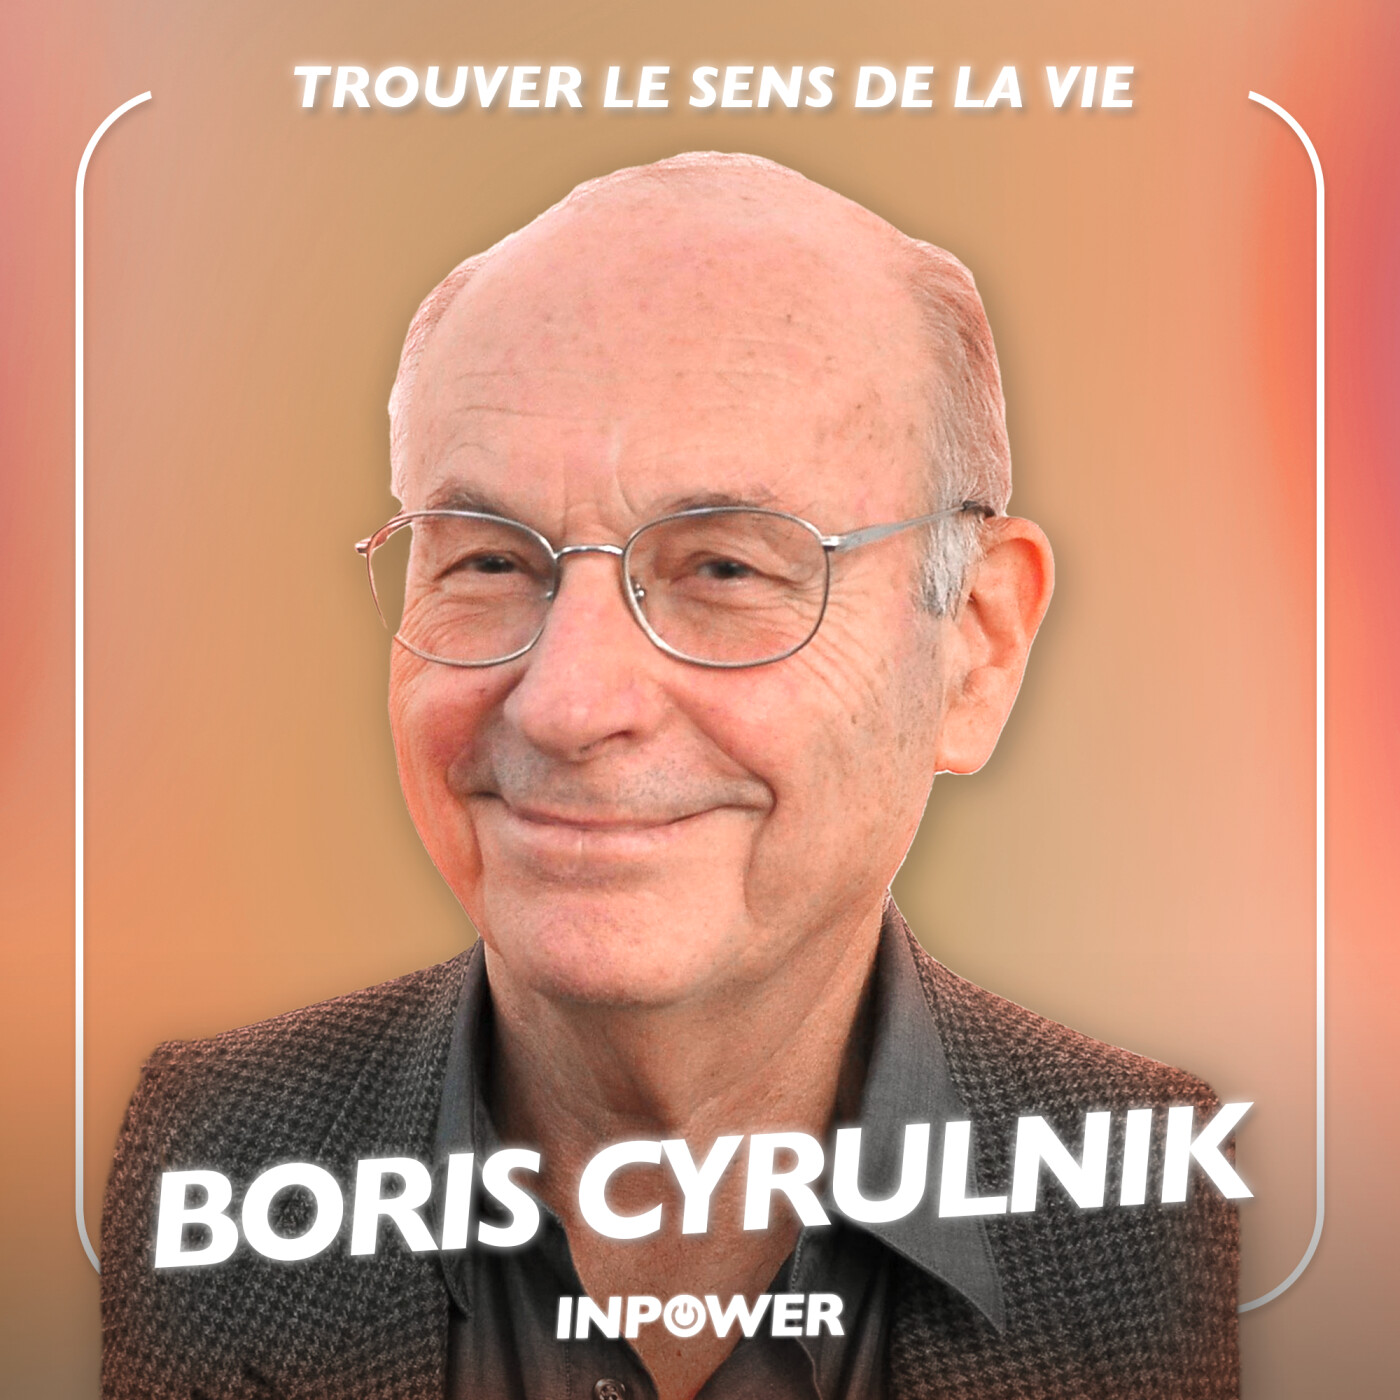 Boris Cyrulnik, Neuropsychiatre - Trouver le sens de la vie [BEST-OF]